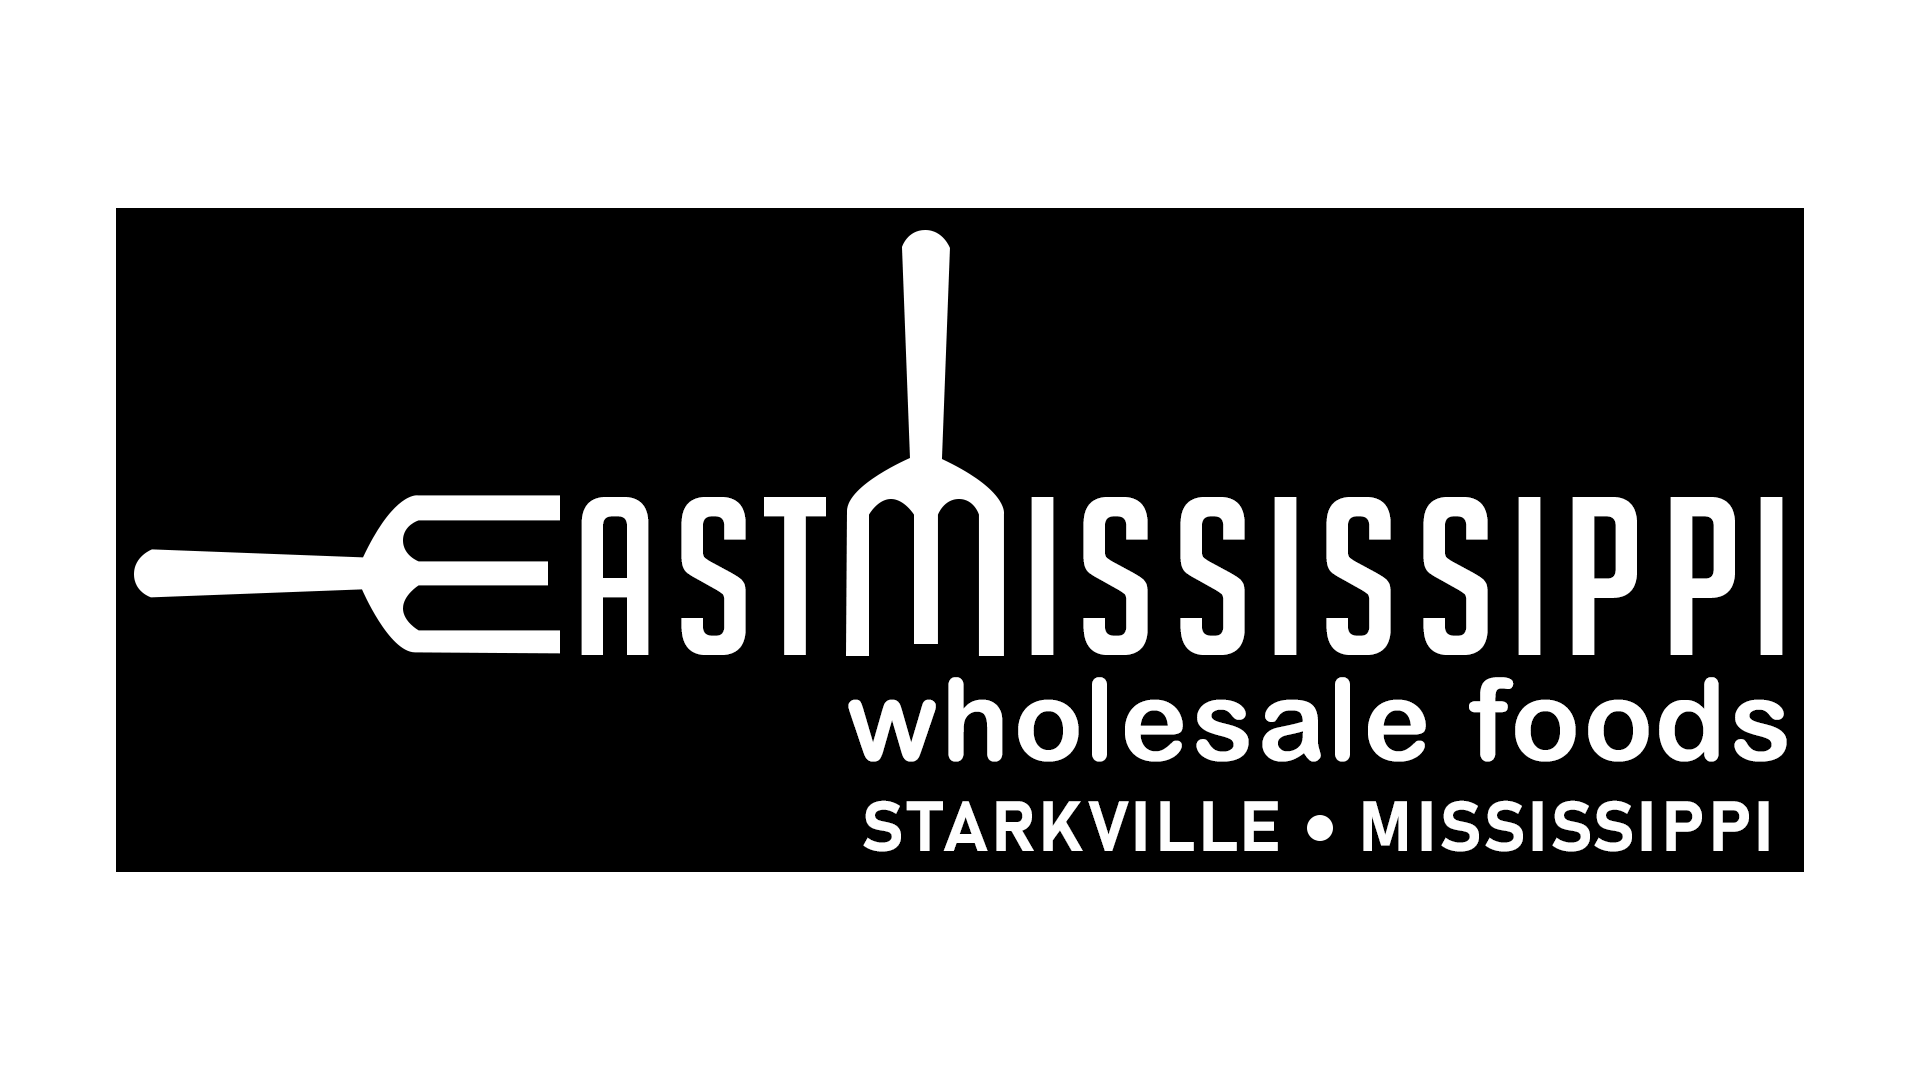 East Ms Wholesale Foods Image